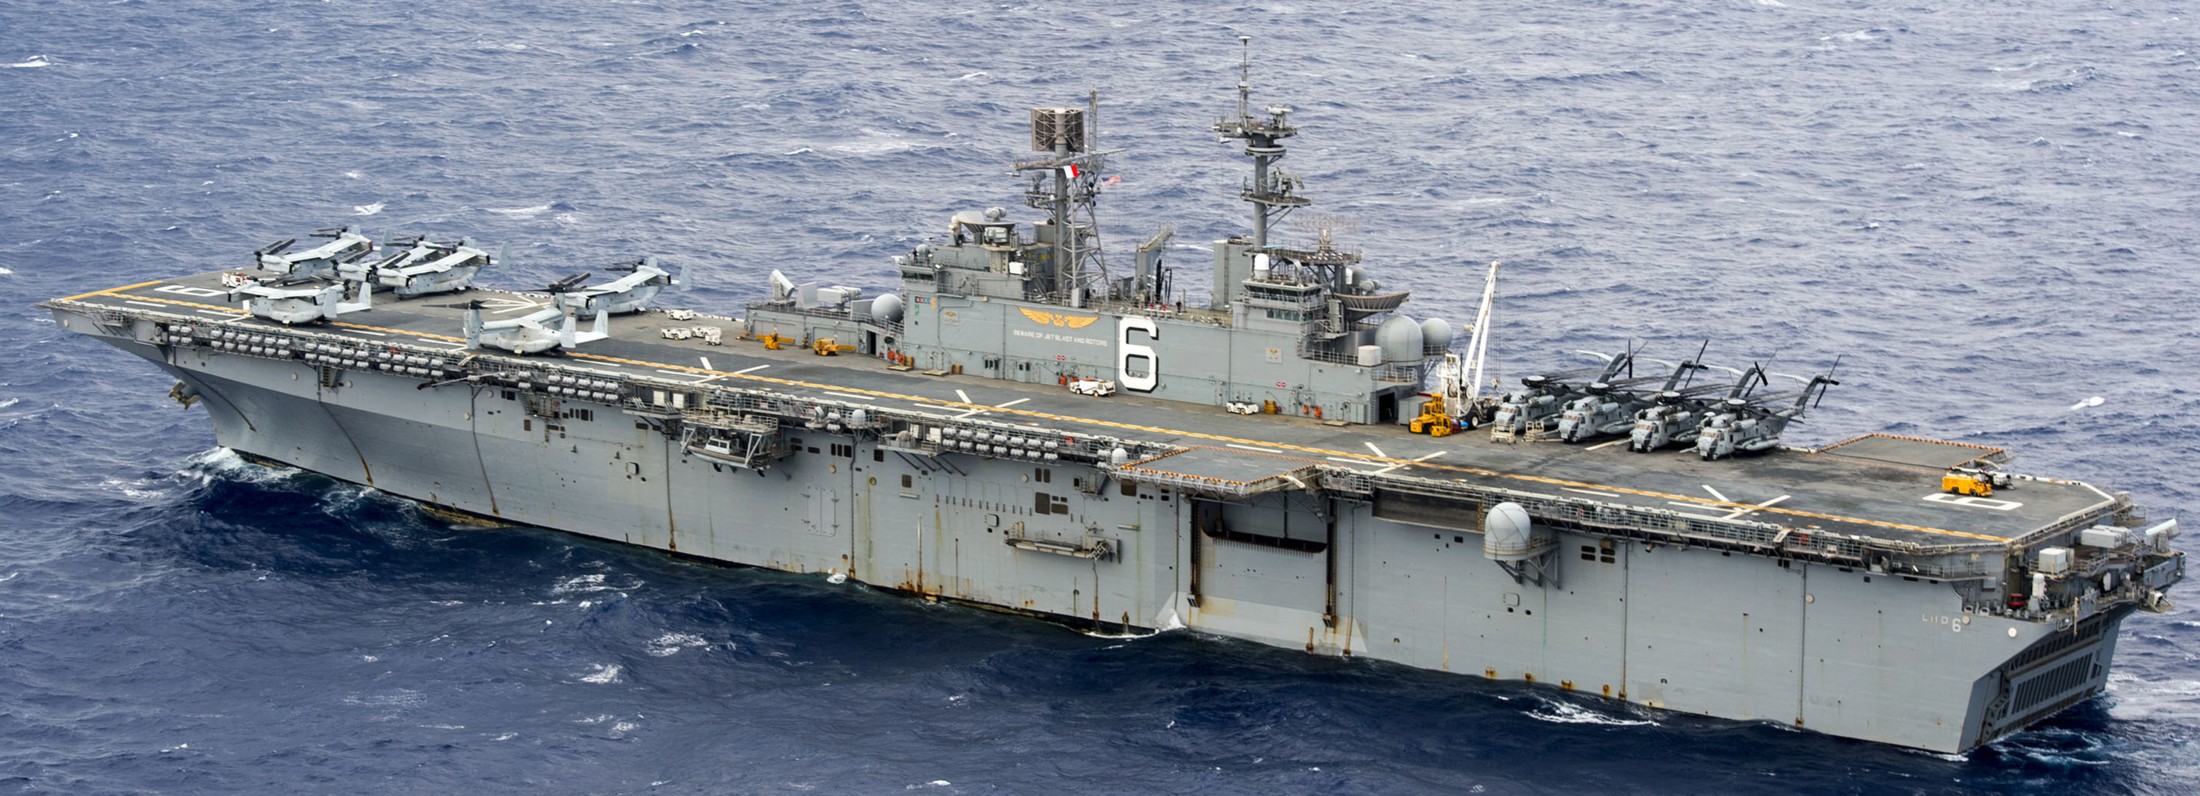 lhd-6 uss bonhomme richard amphibious assault ship landing helicopter dock wasp class us navy east china sea 121